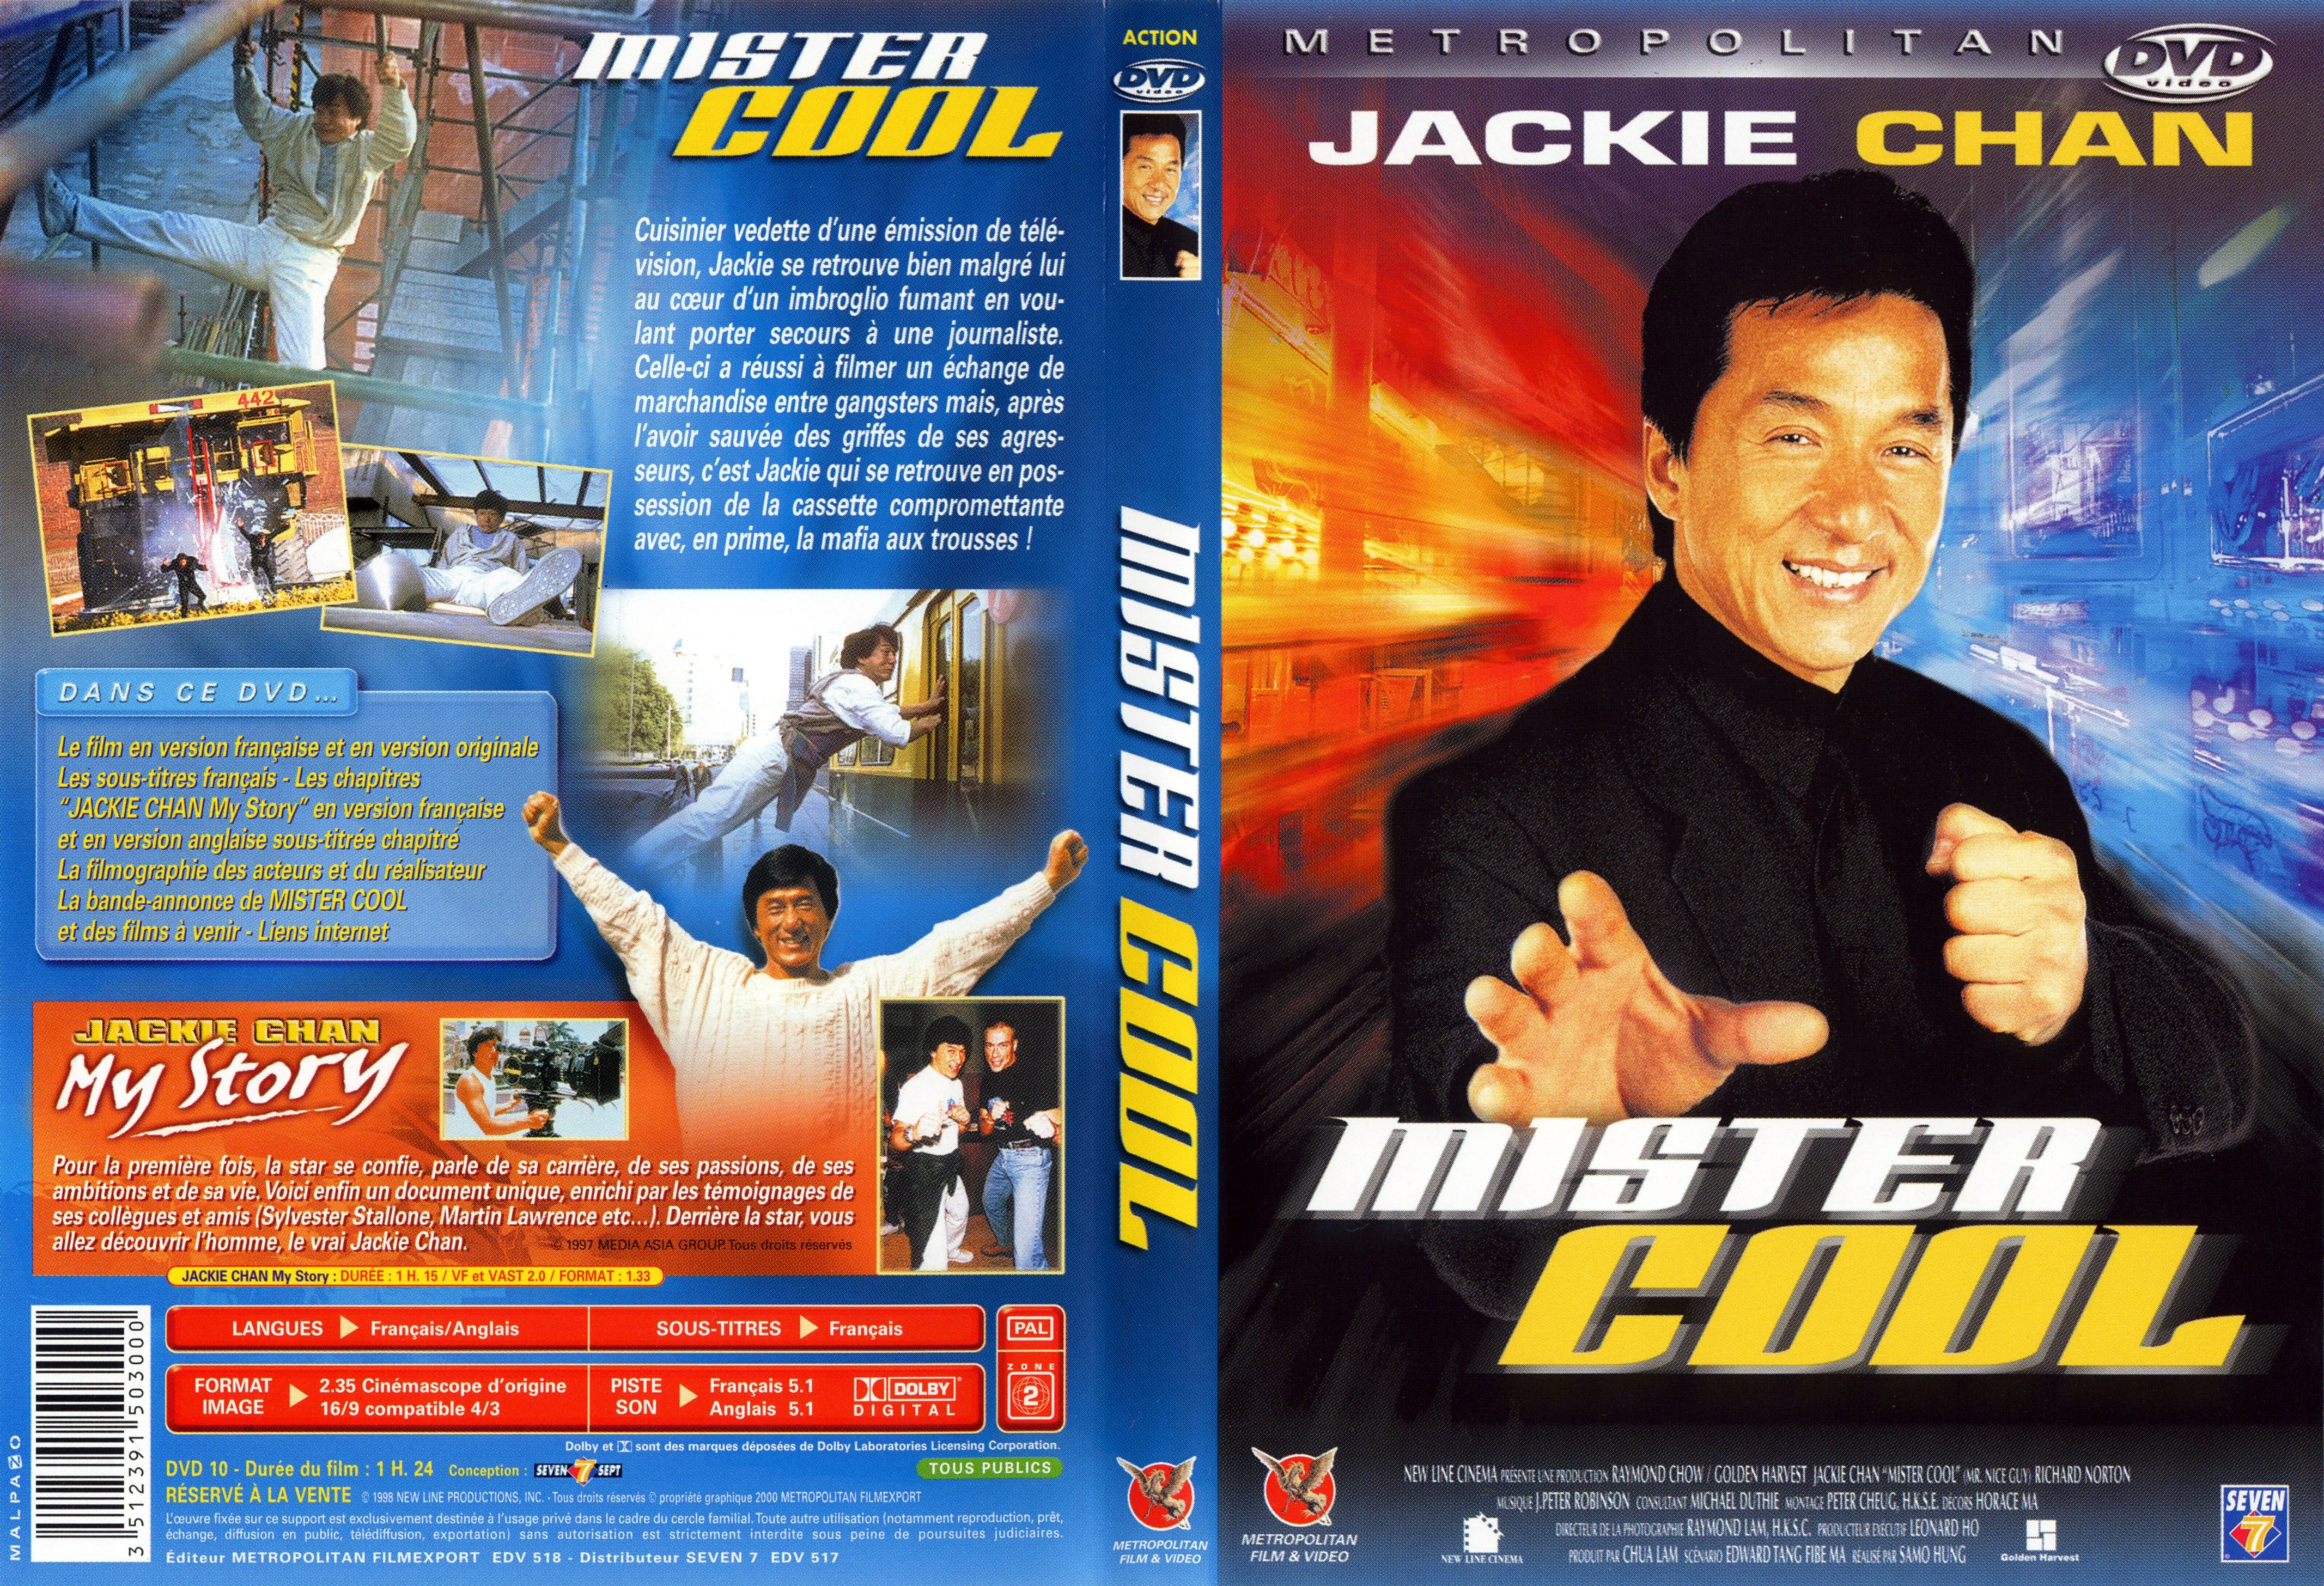 Jaquette DVD Mister cool